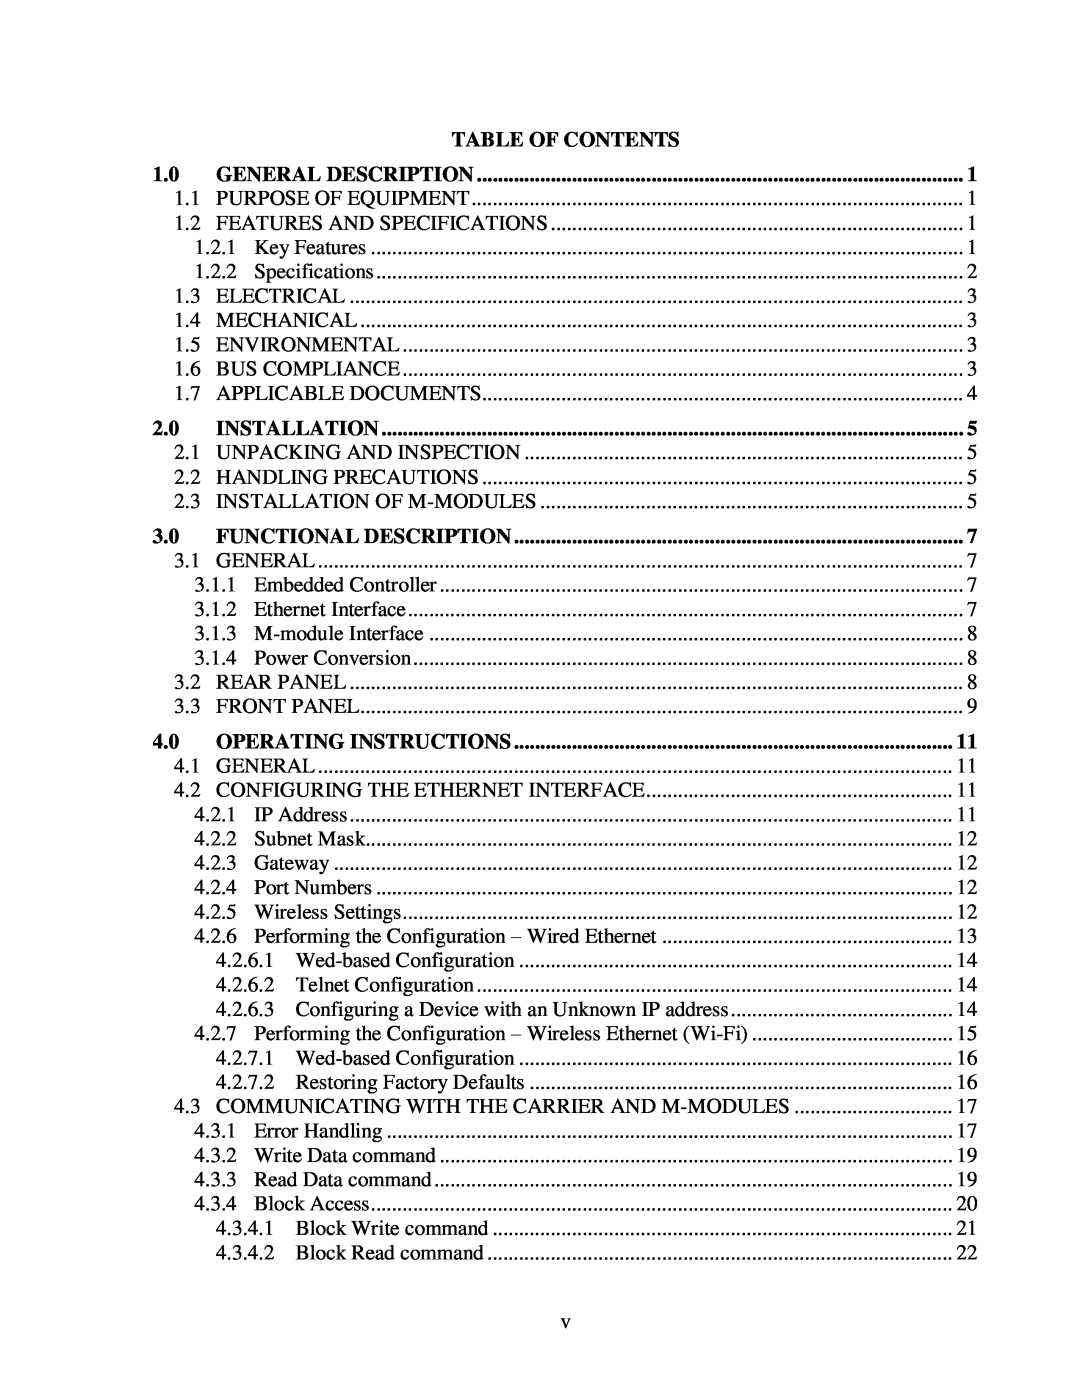 CH Tech EM405D Table Of Contents, General Description, Installation, Functional Description, Operating Instructions 